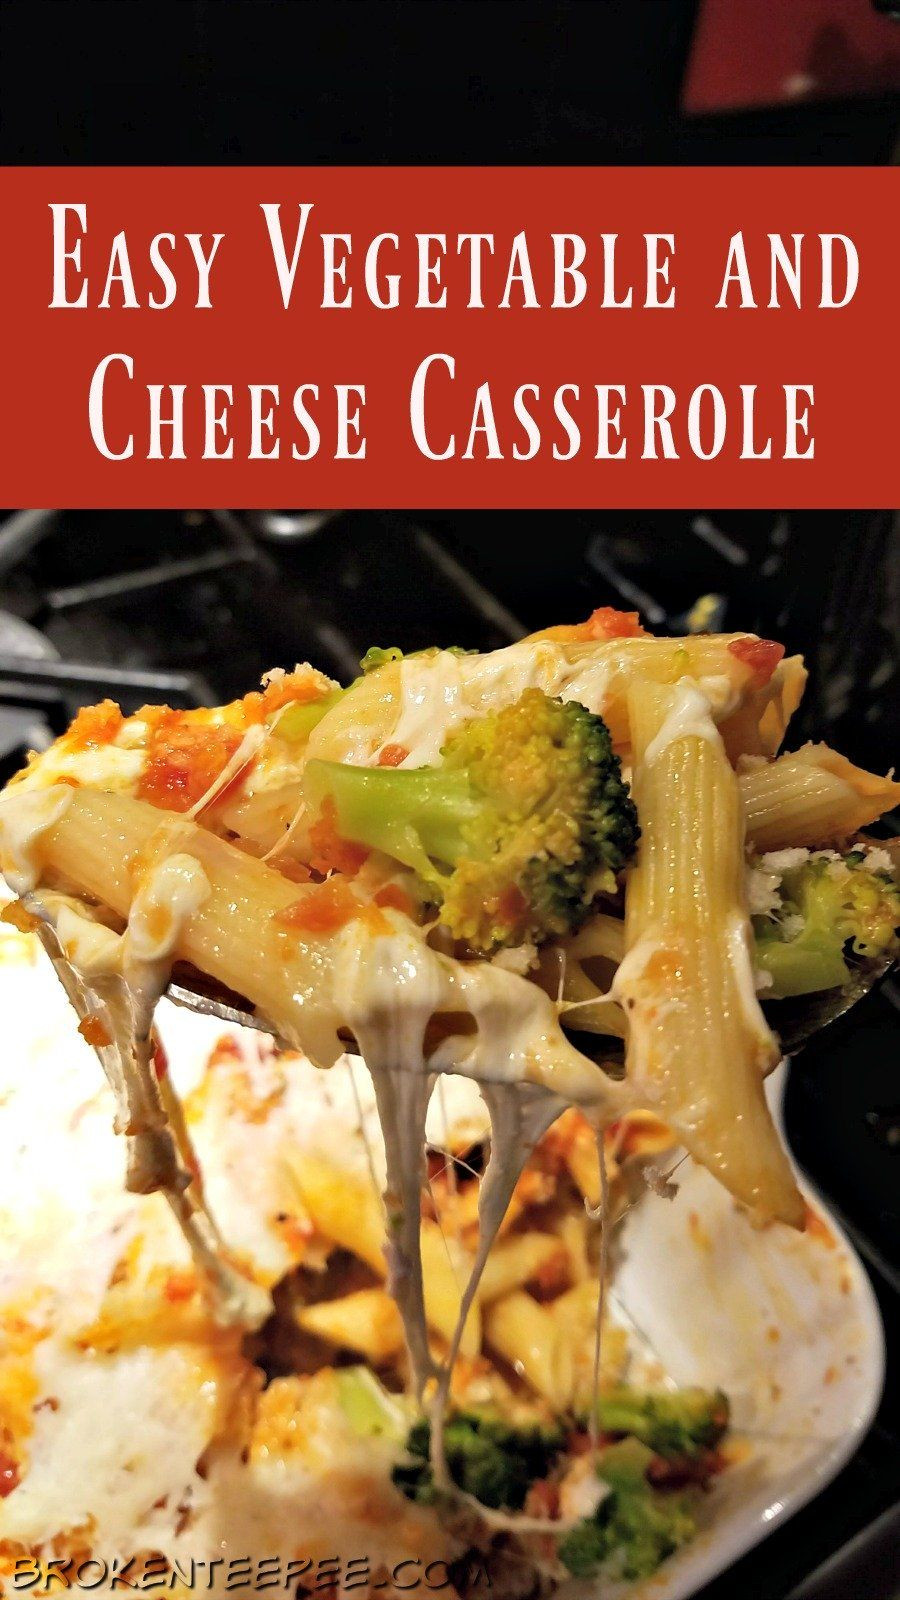 Easy Vegetable Casserole Recipes
 Easy Ve able Casserole Recipe